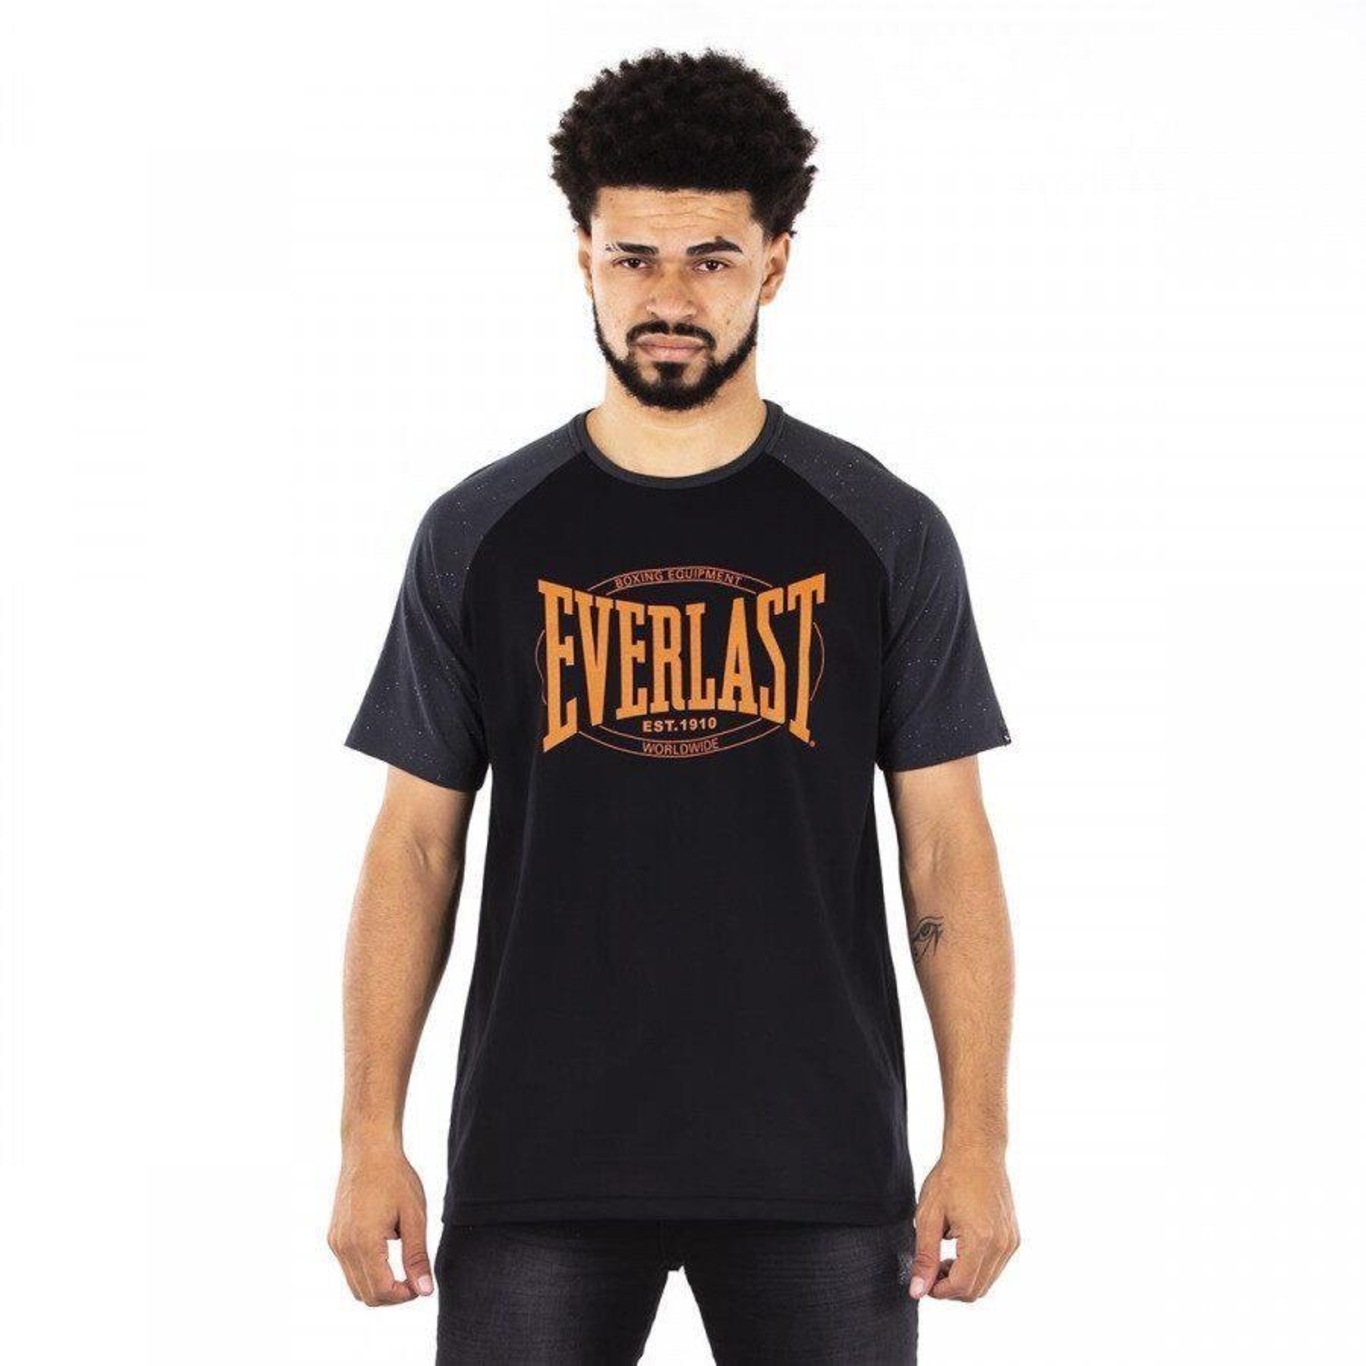 Camiseta Everlast Fundamentals - Masculina - Foto 1